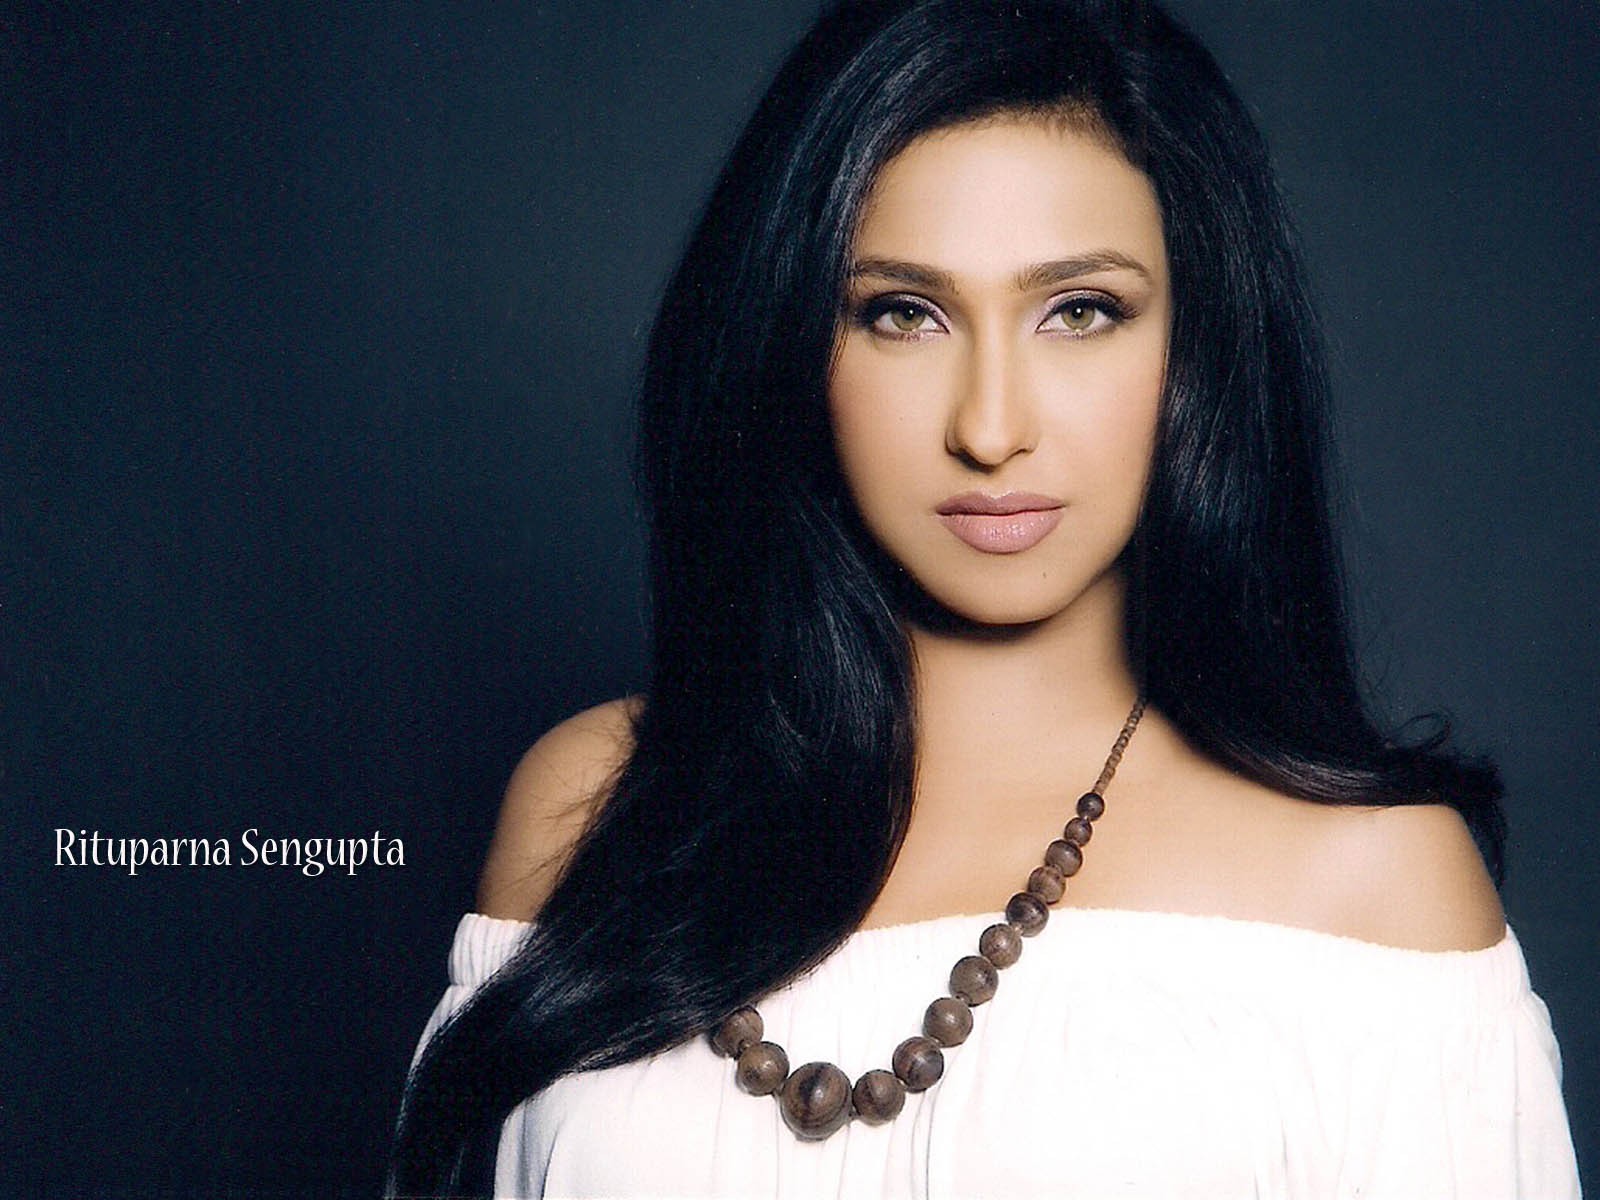 Bollywood Girls Images Bollywood Actress Rituparna Sengupta Image